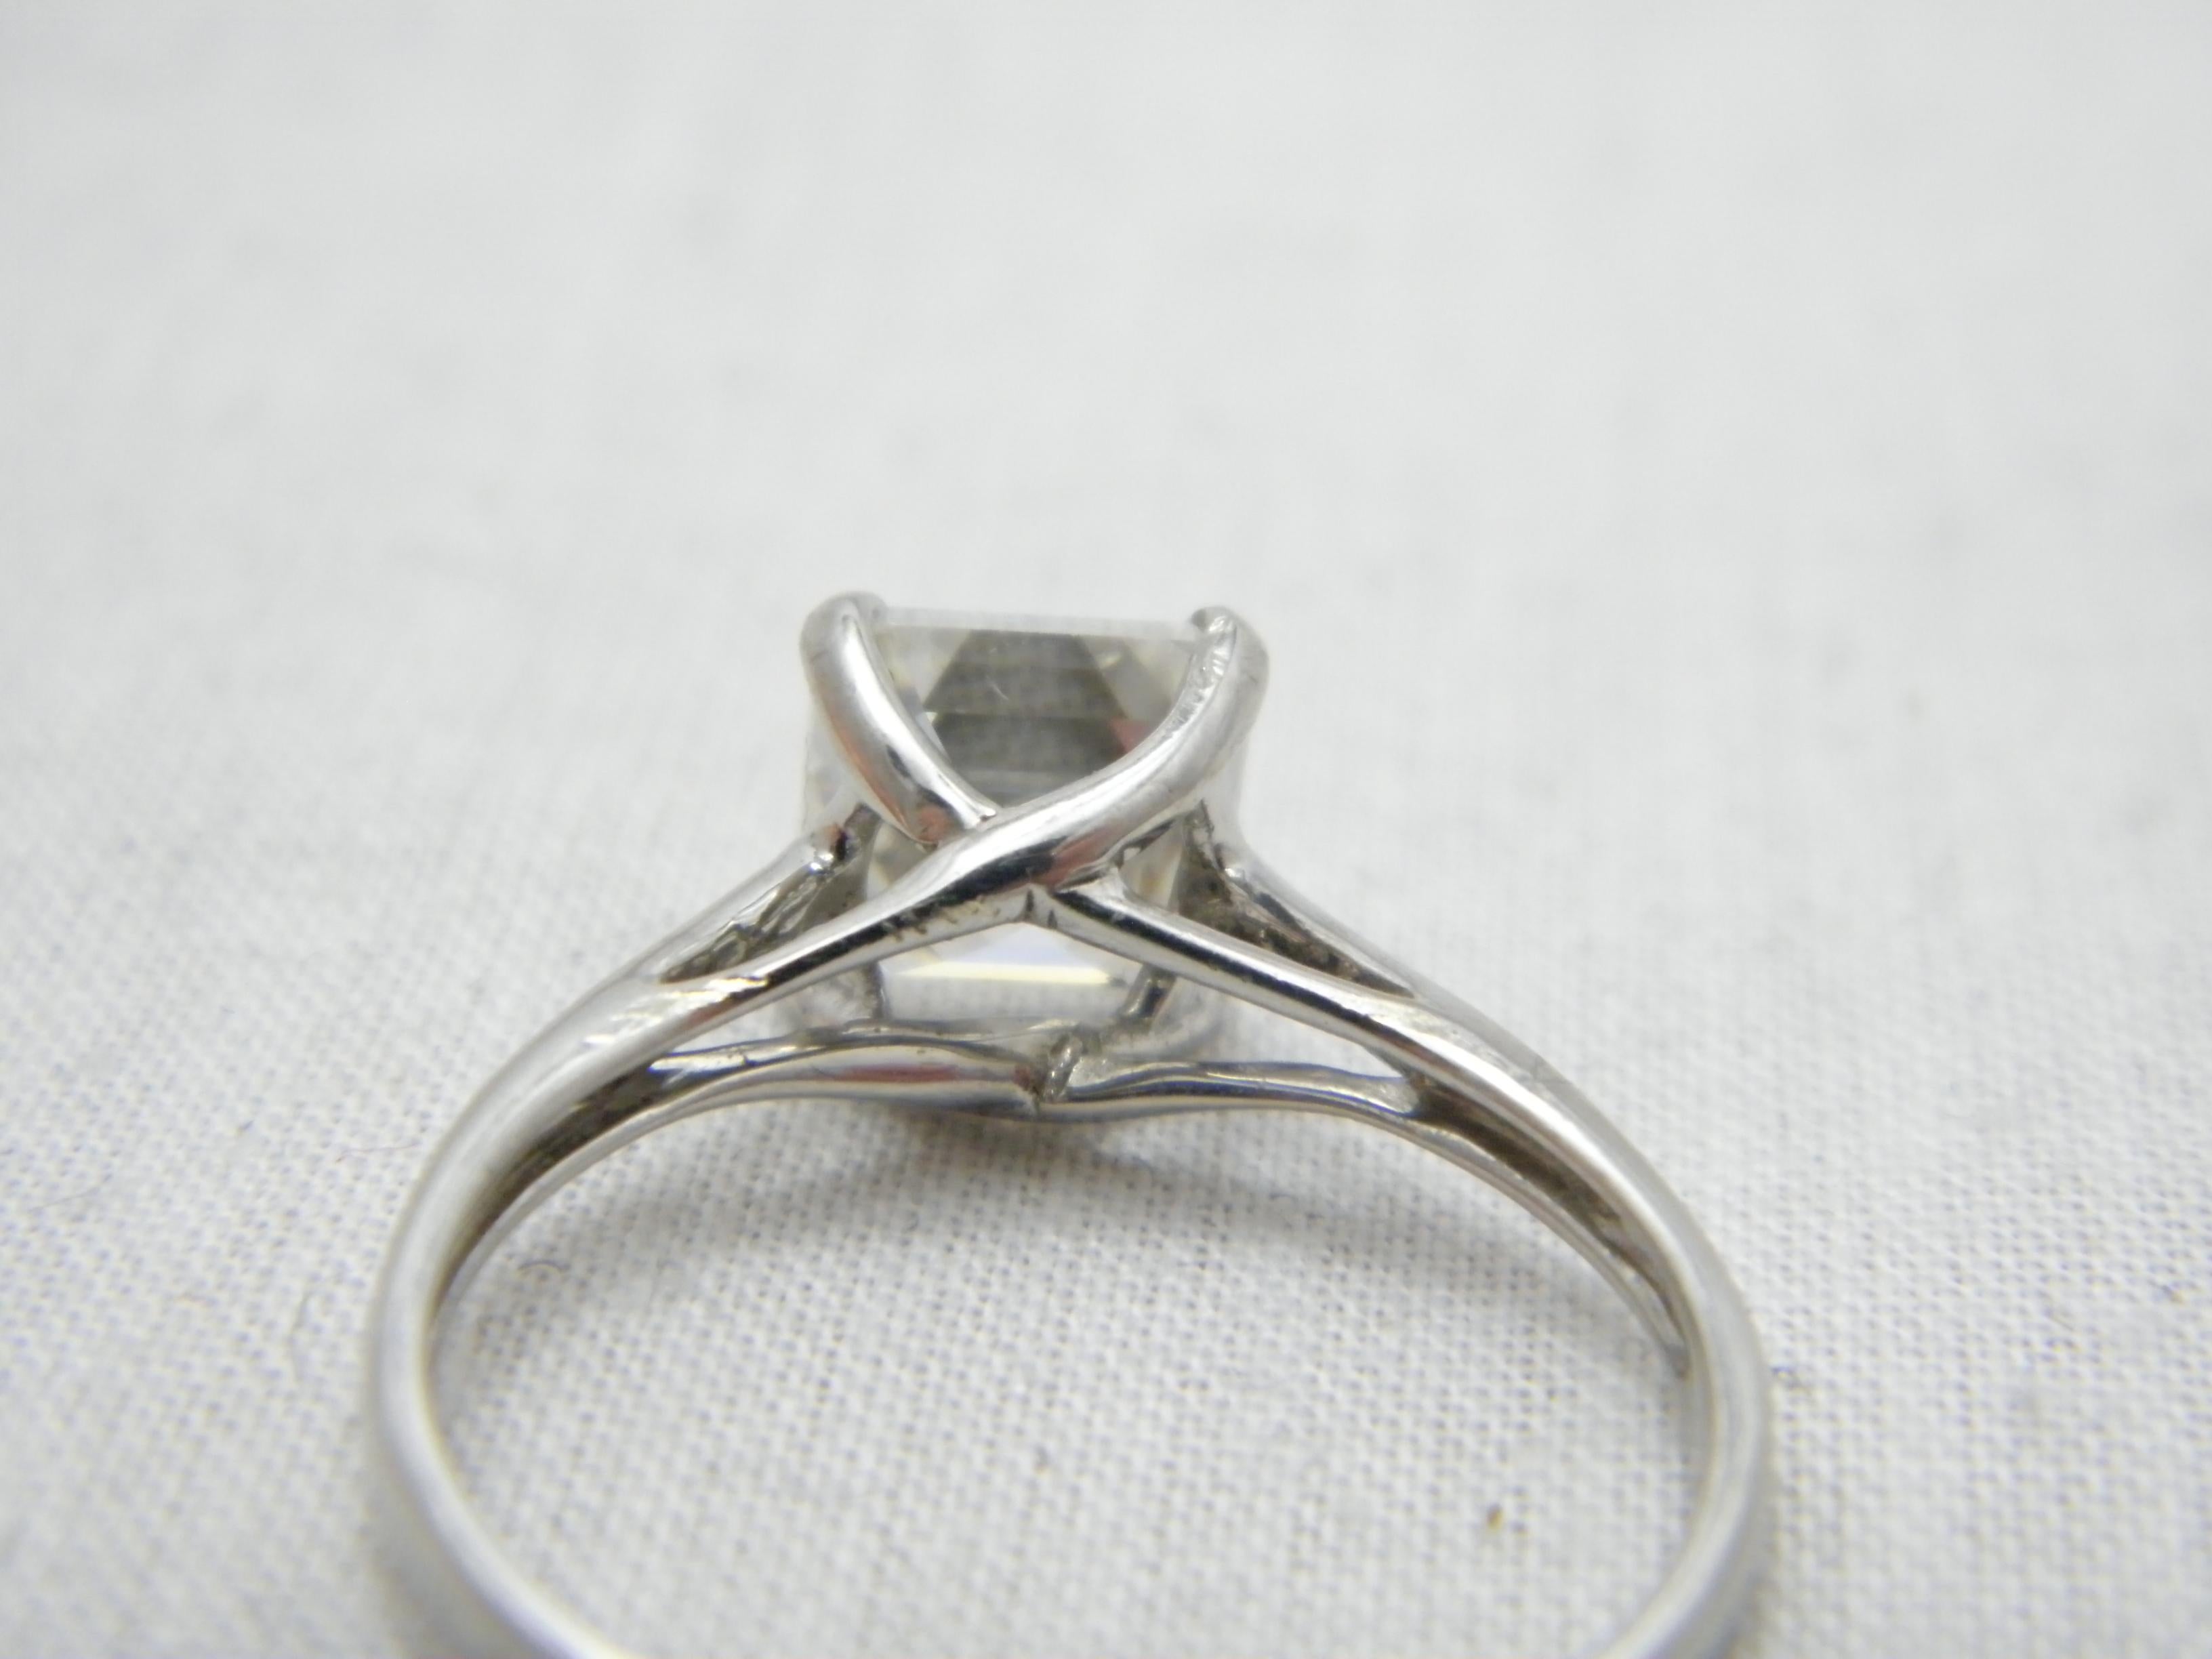 Vintage 14ct White Gold 2.75 Cttw Diamond Solitaire Engagement Ring Size Q 8.25 For Sale 2